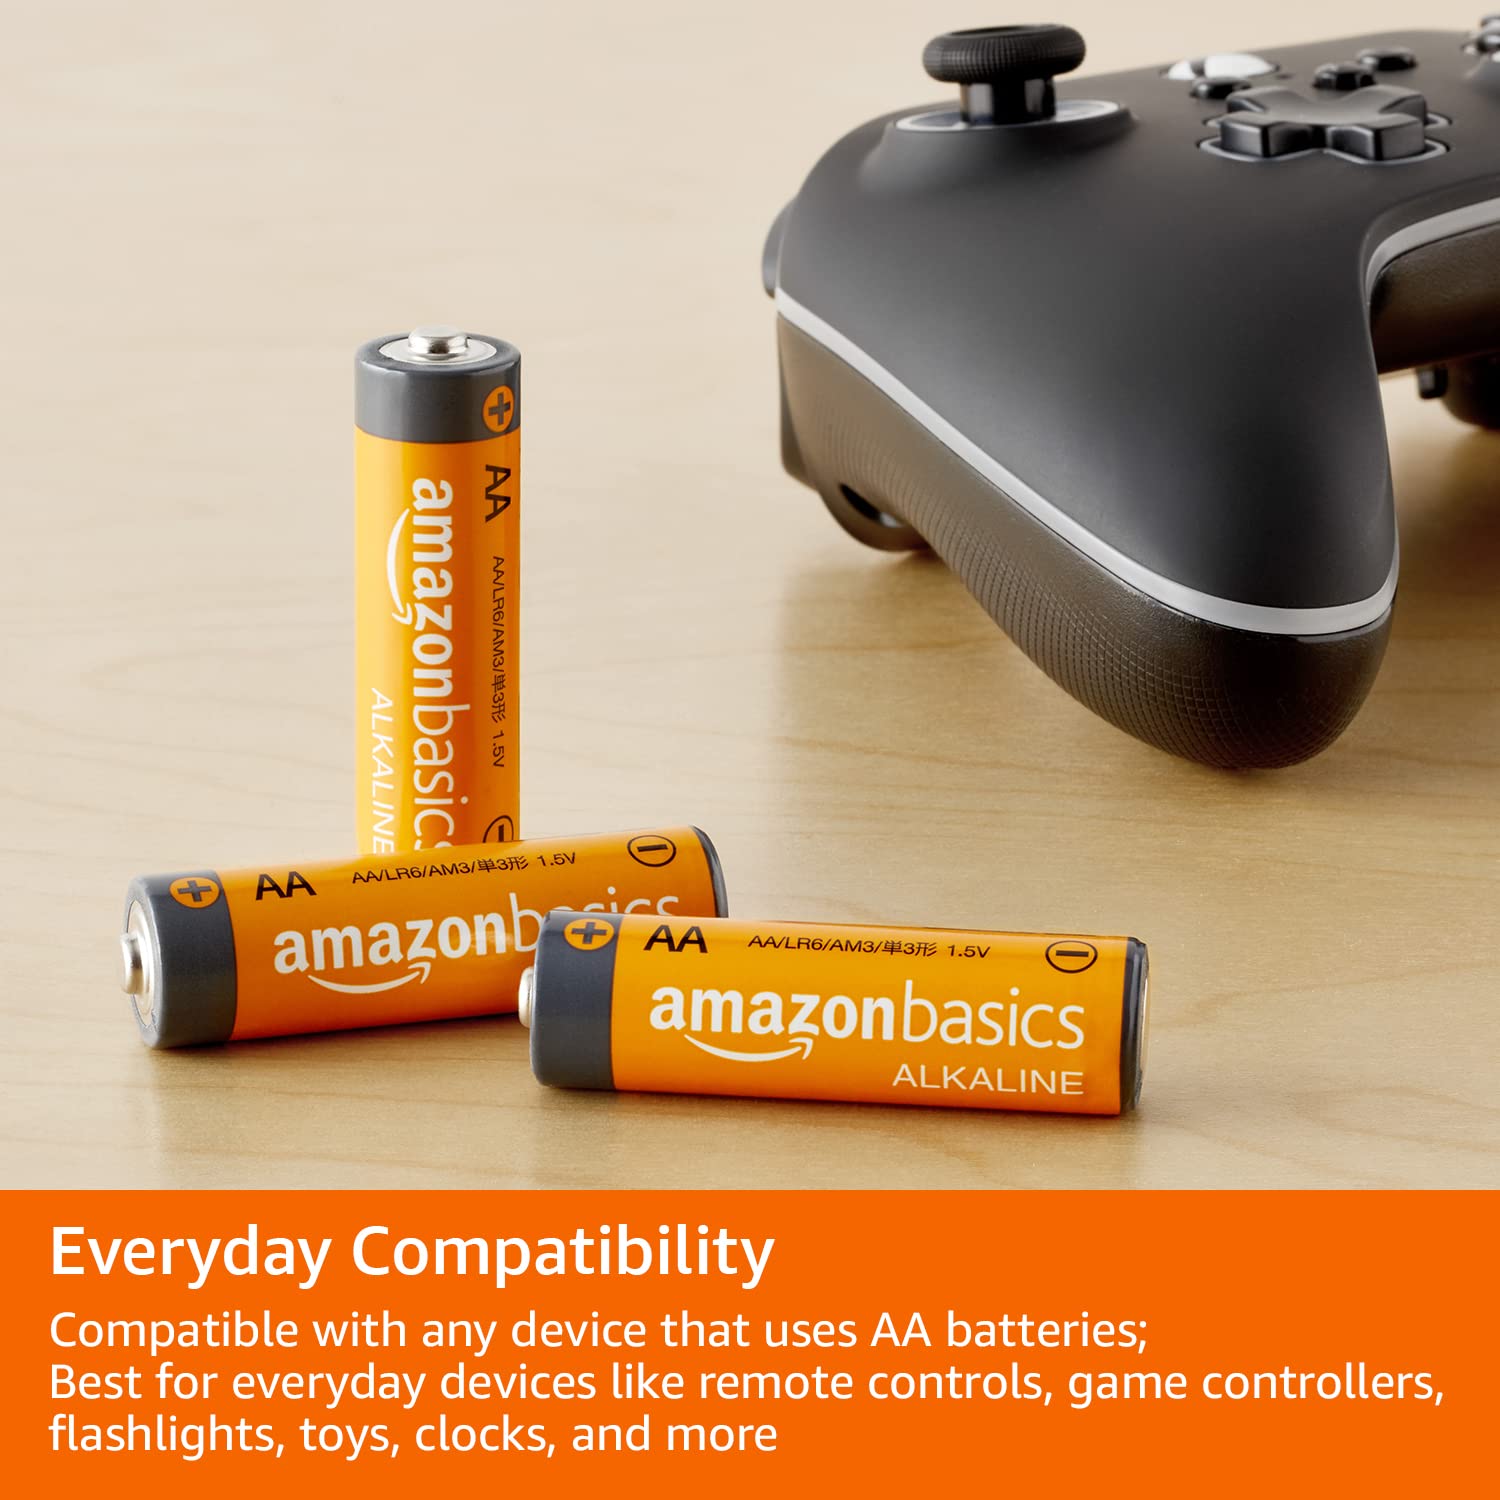 Amazon Basics AA High-Performance Alkaline Batteries, 500 Count (5 Packs of 100)